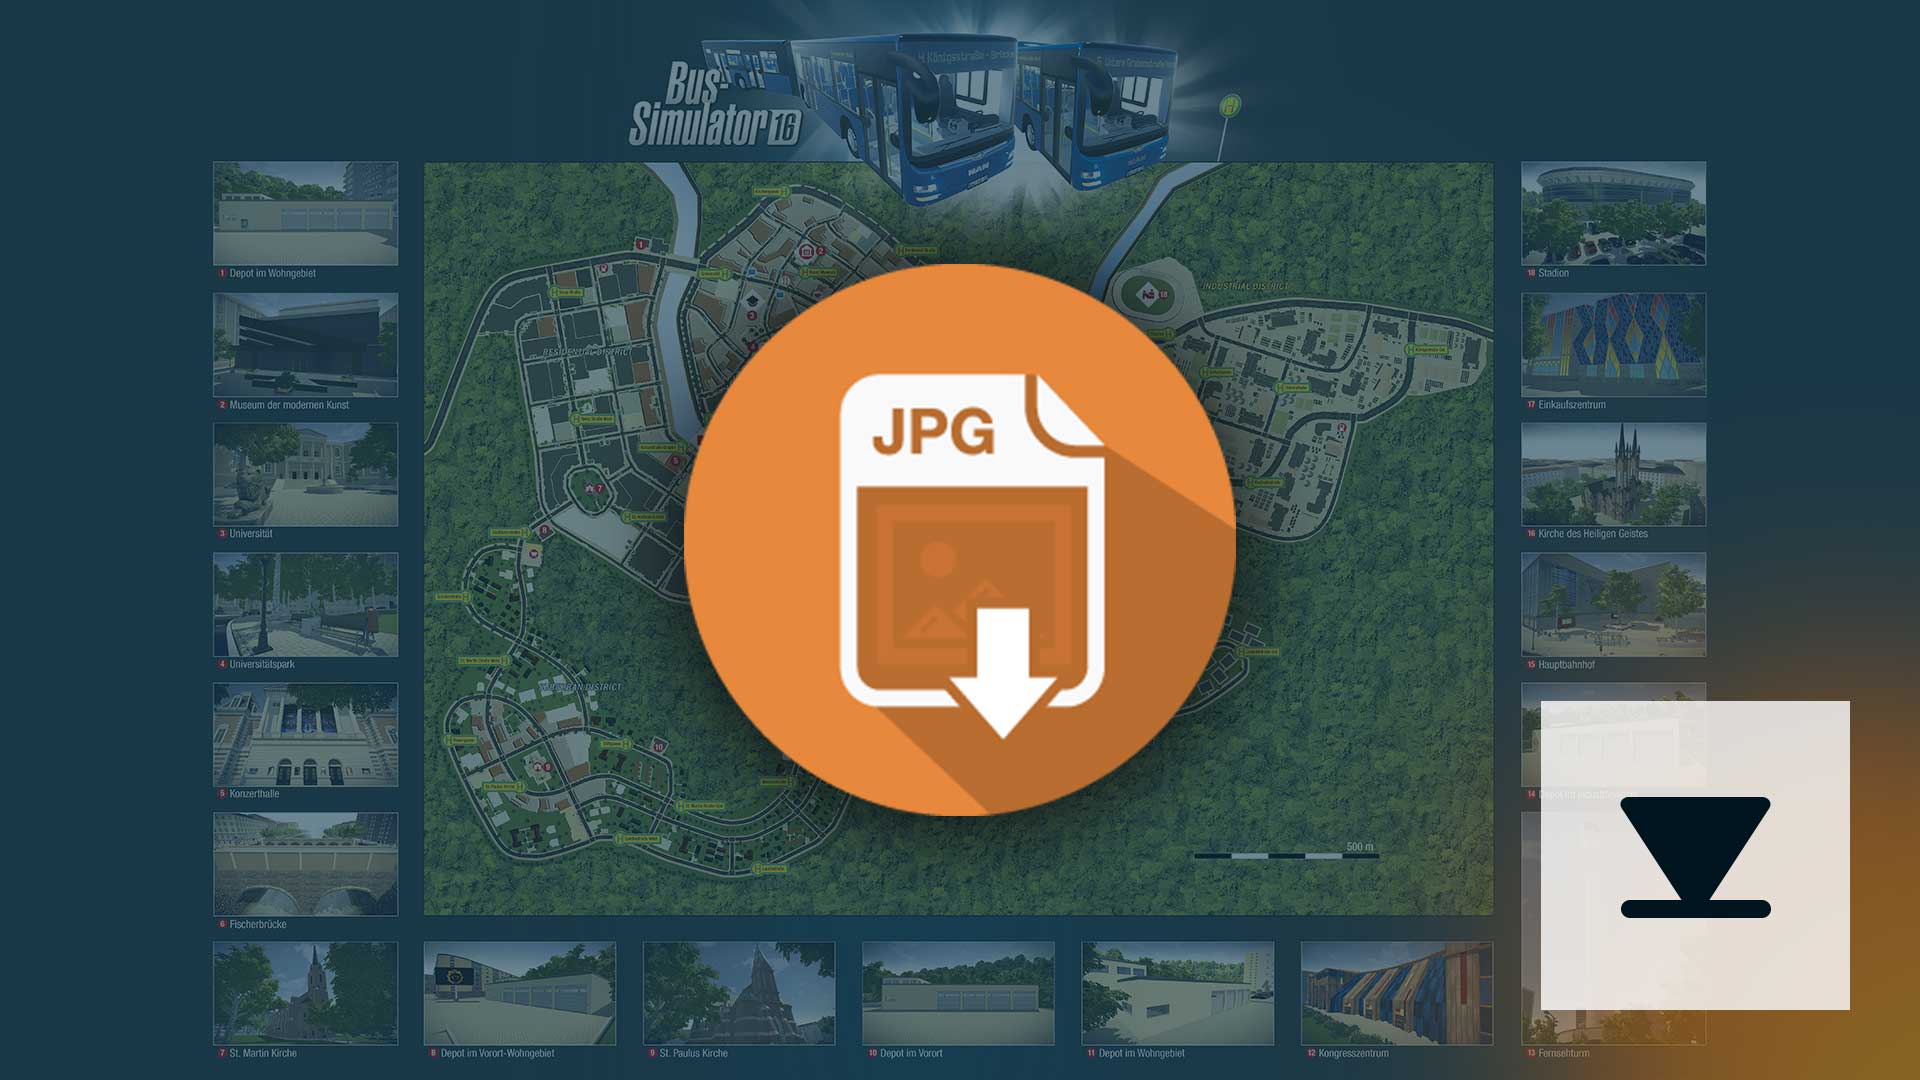 Bus Simulator 16 - Karte als JPG